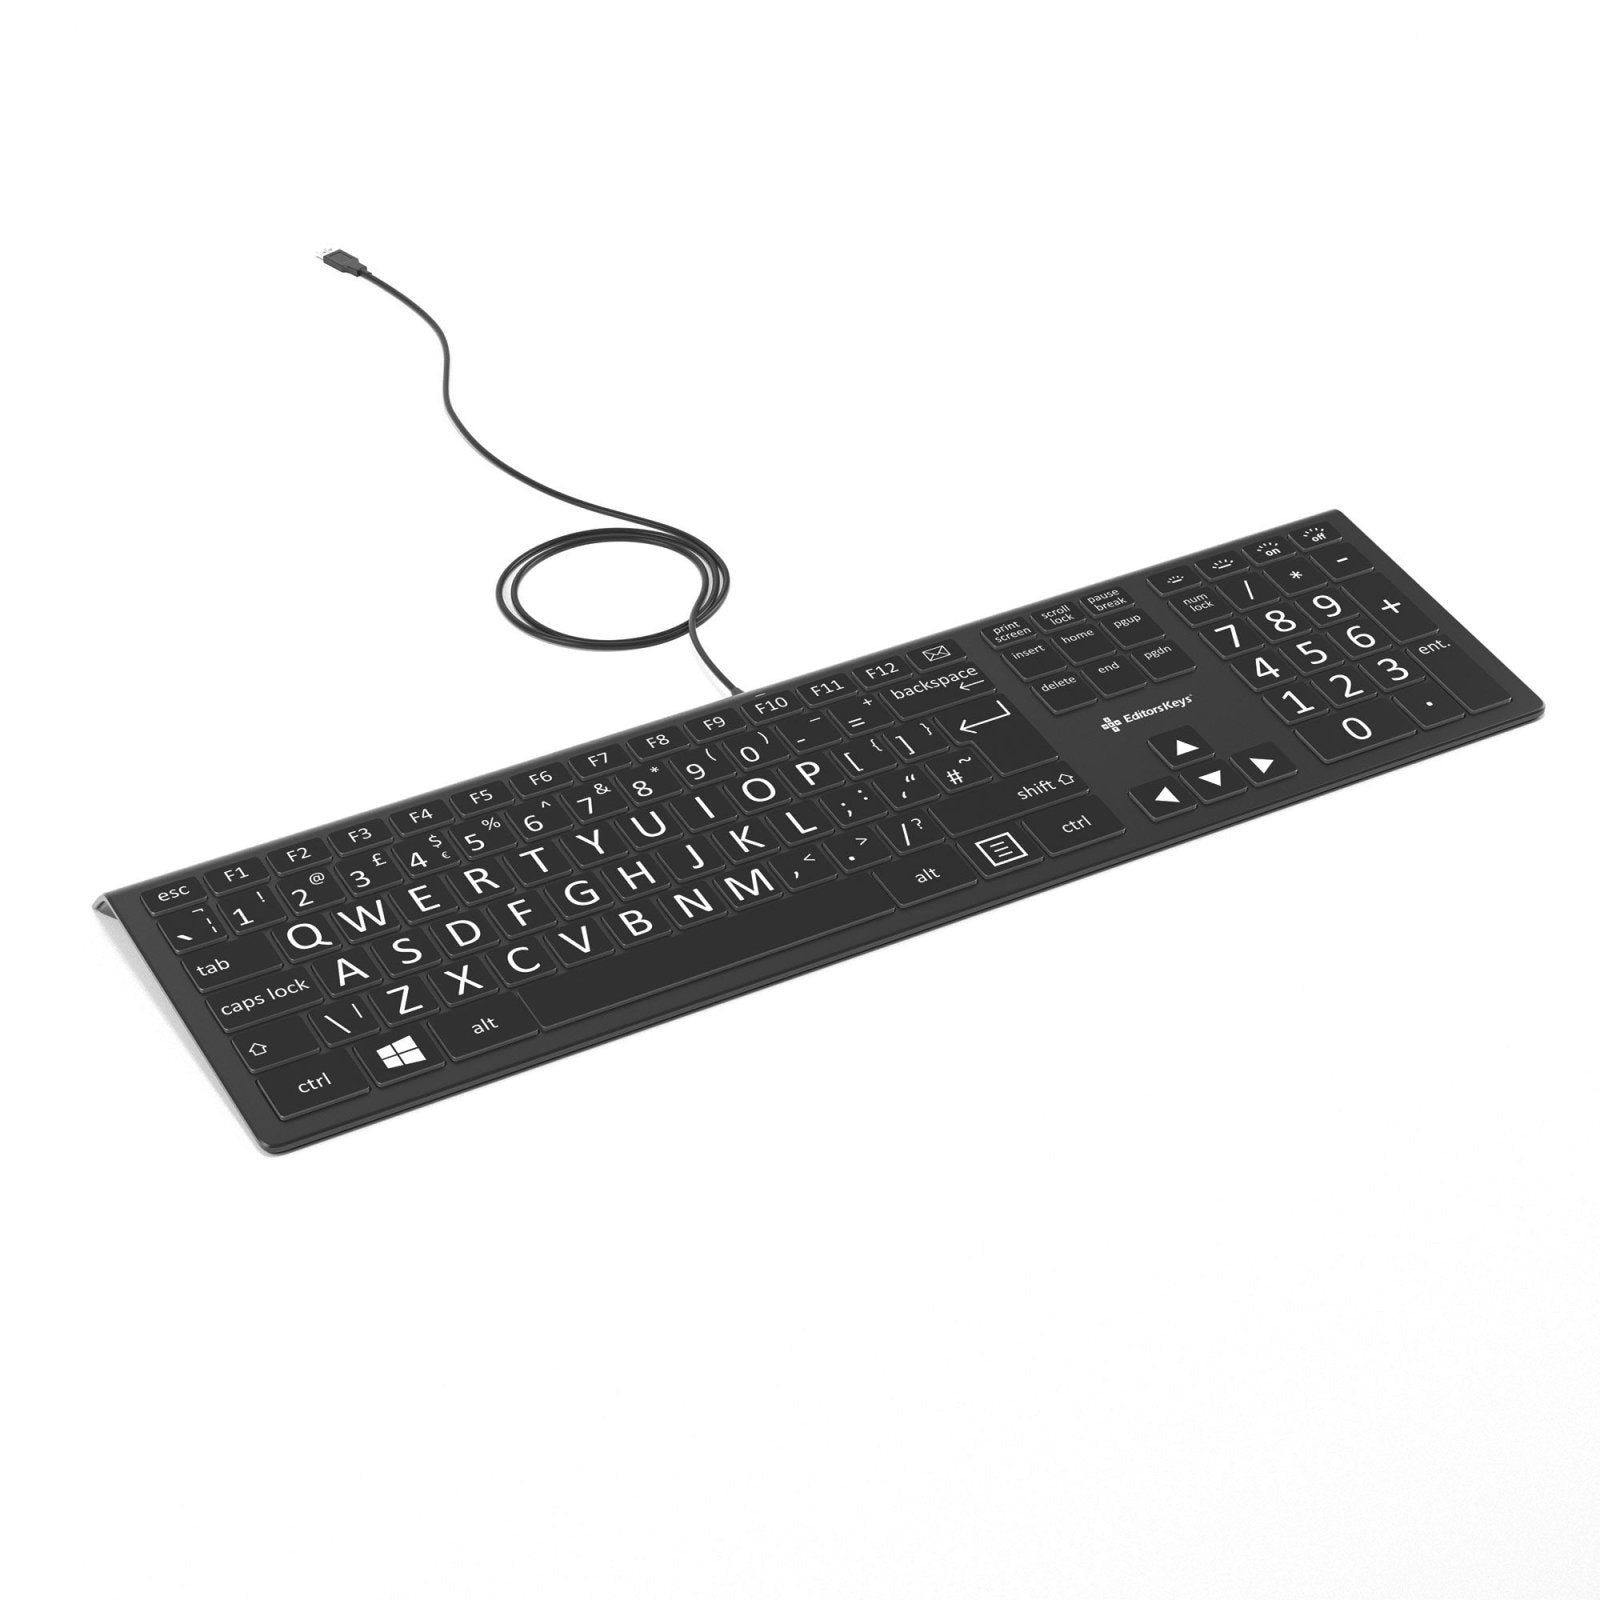 Large Print Backlit Keyboard Black and White Version - Editors Keys